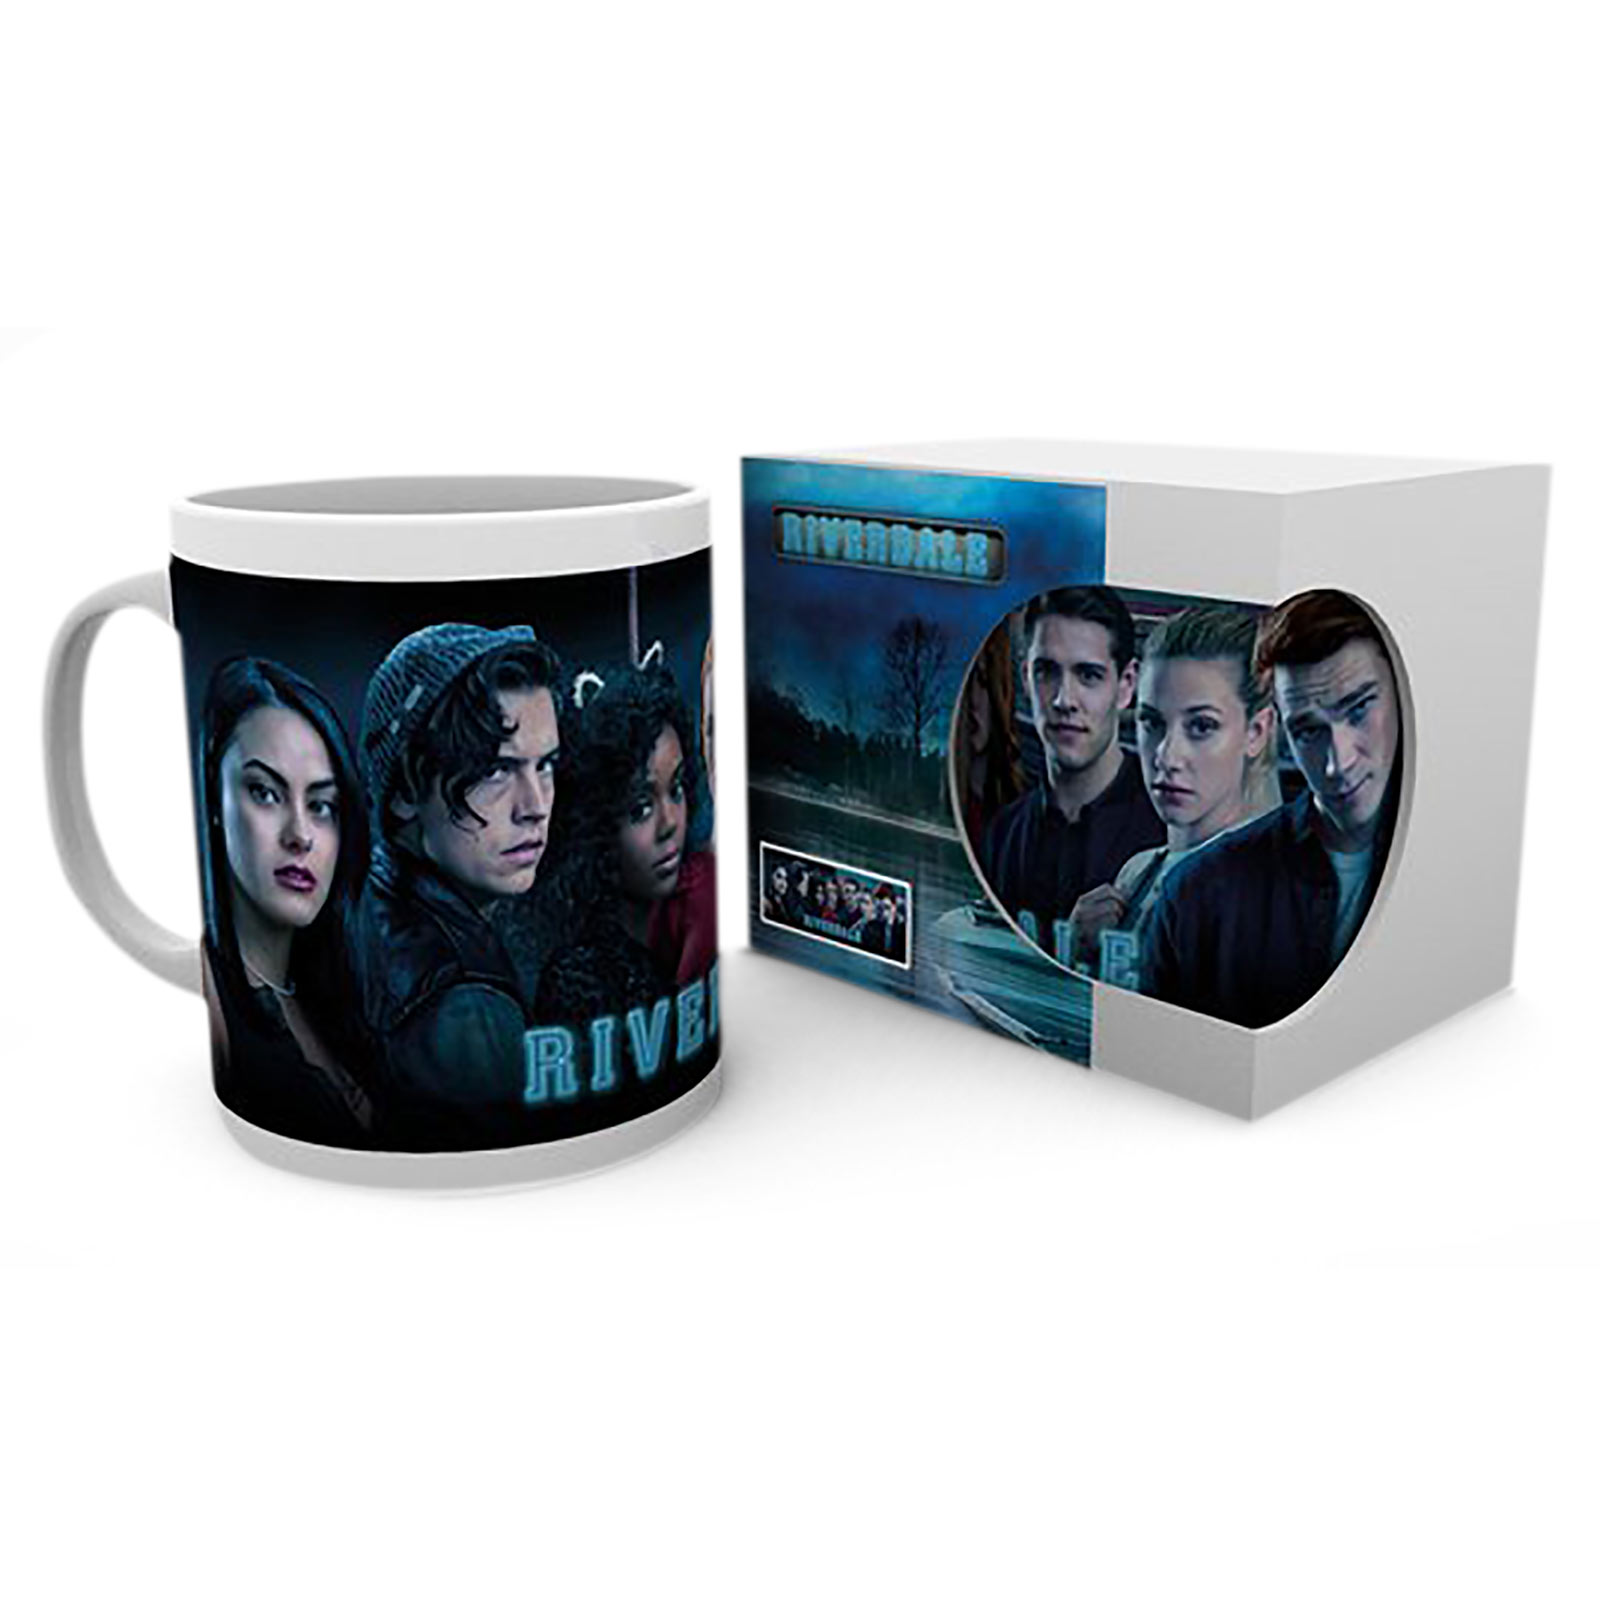 Riverdale - Characters Mug